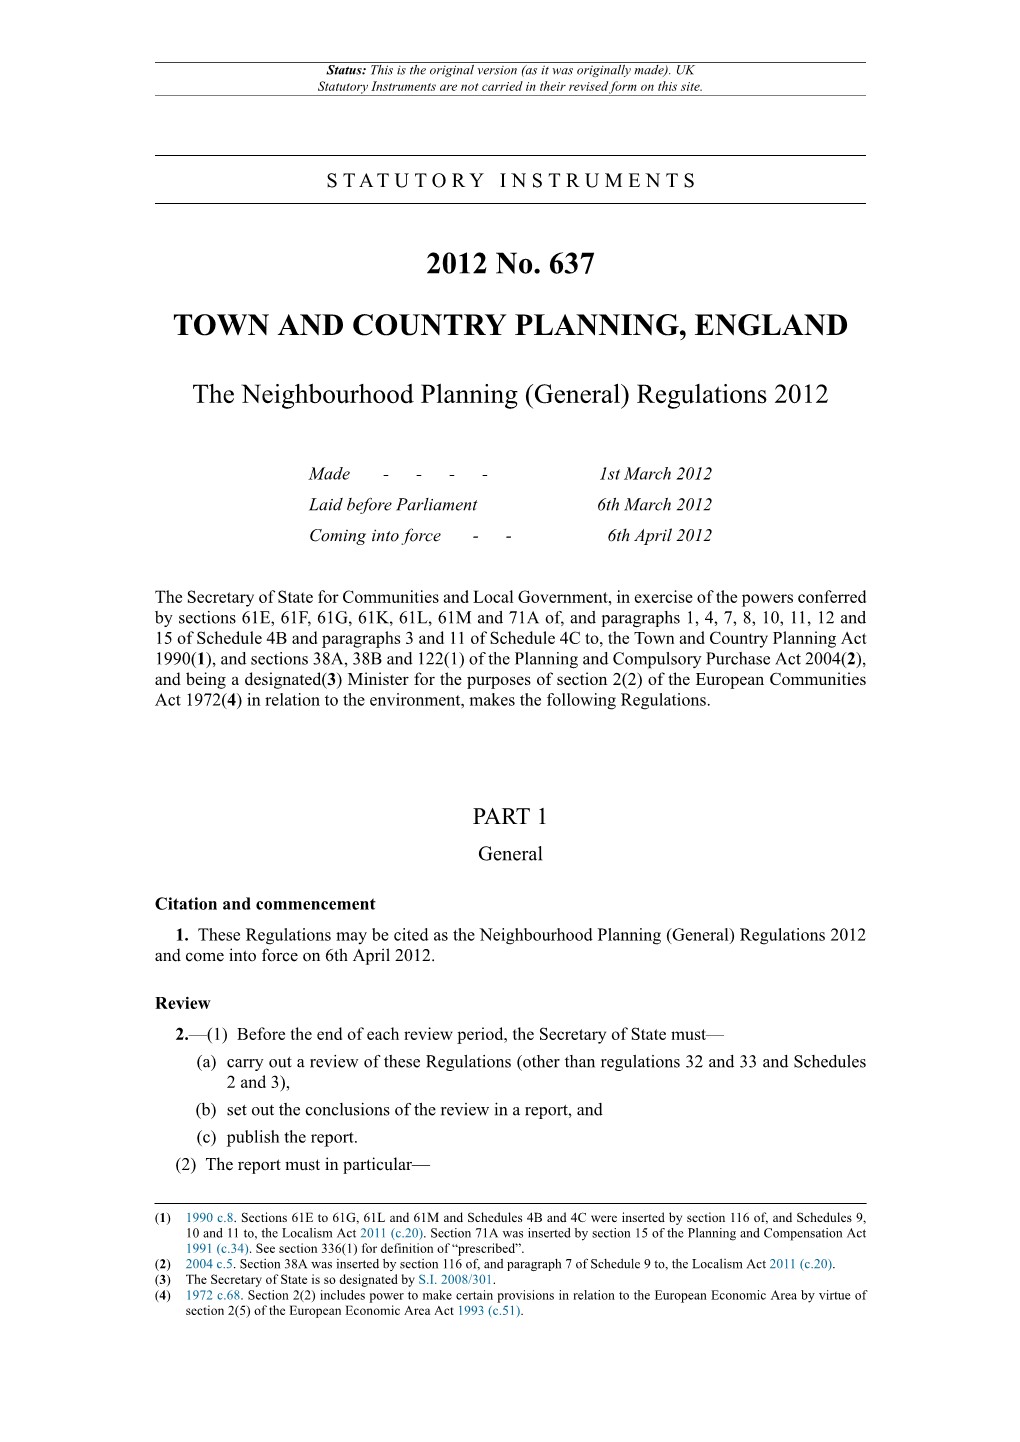 The Neighbourhood Planning (General) Regulations 2012